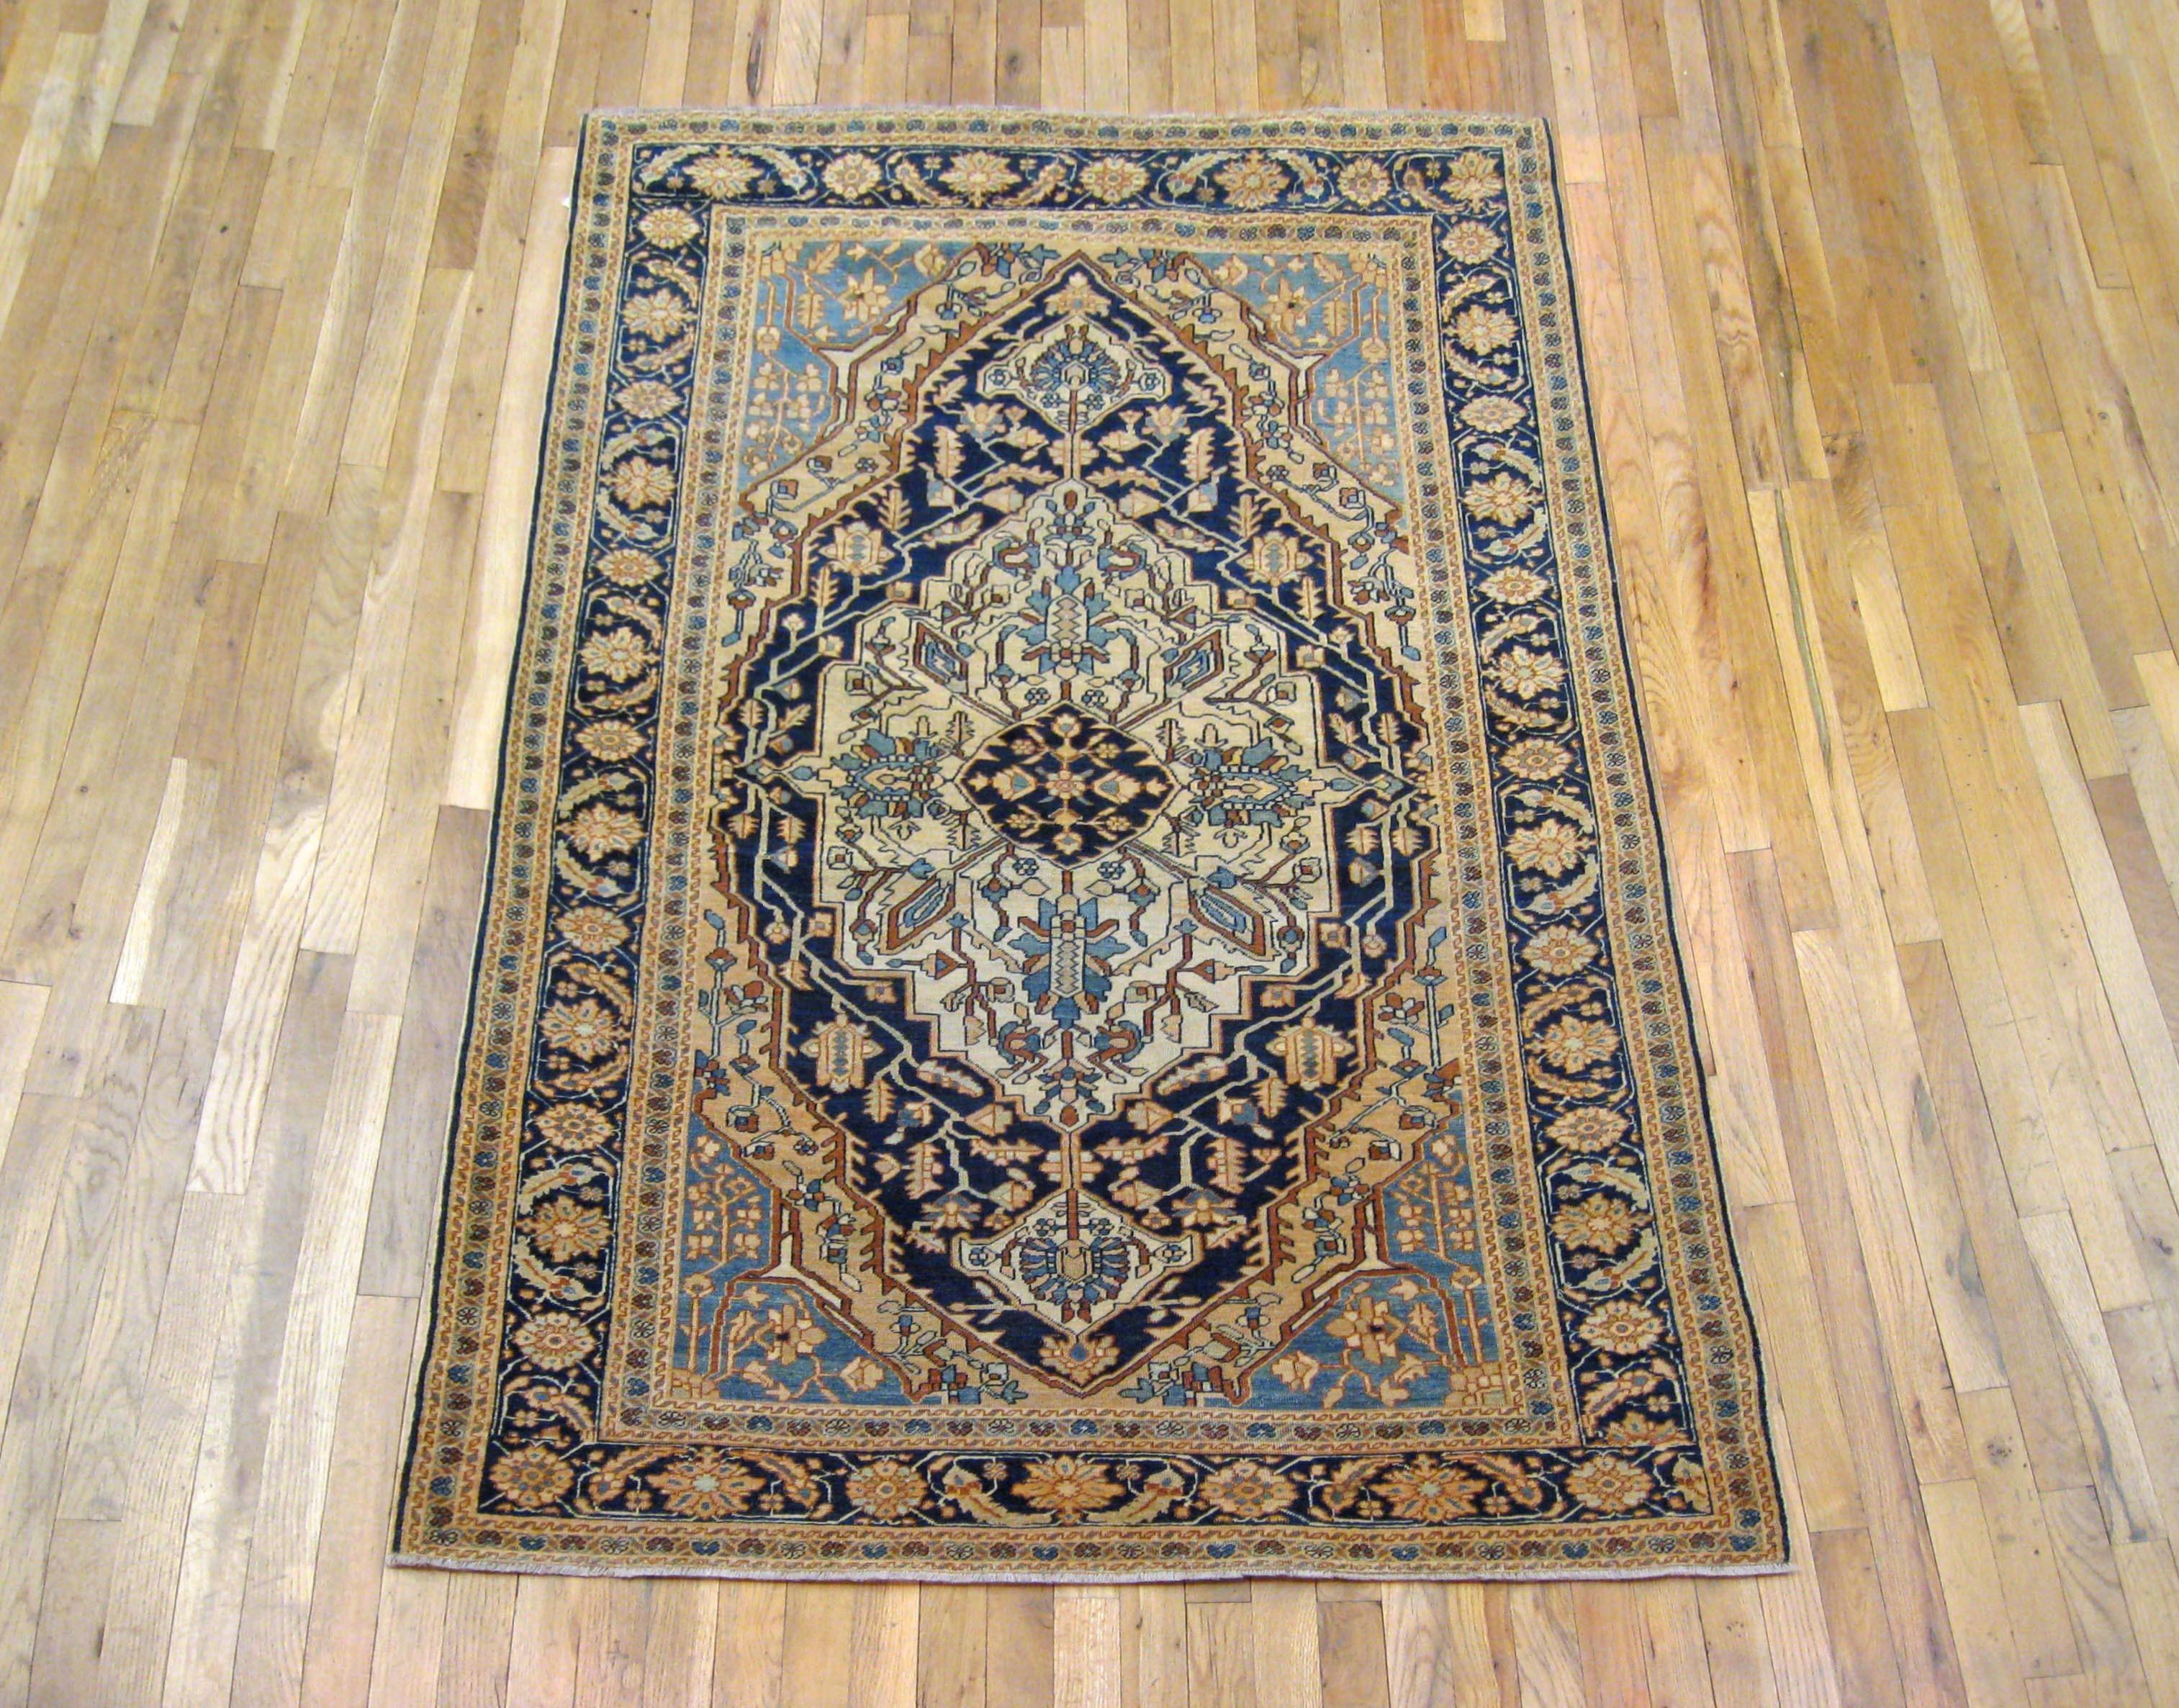 Antique Ferahan Sarouk oriental rug, circa 1910, small size

An antique Ferahan Sarouk oriental rug, size 6'8